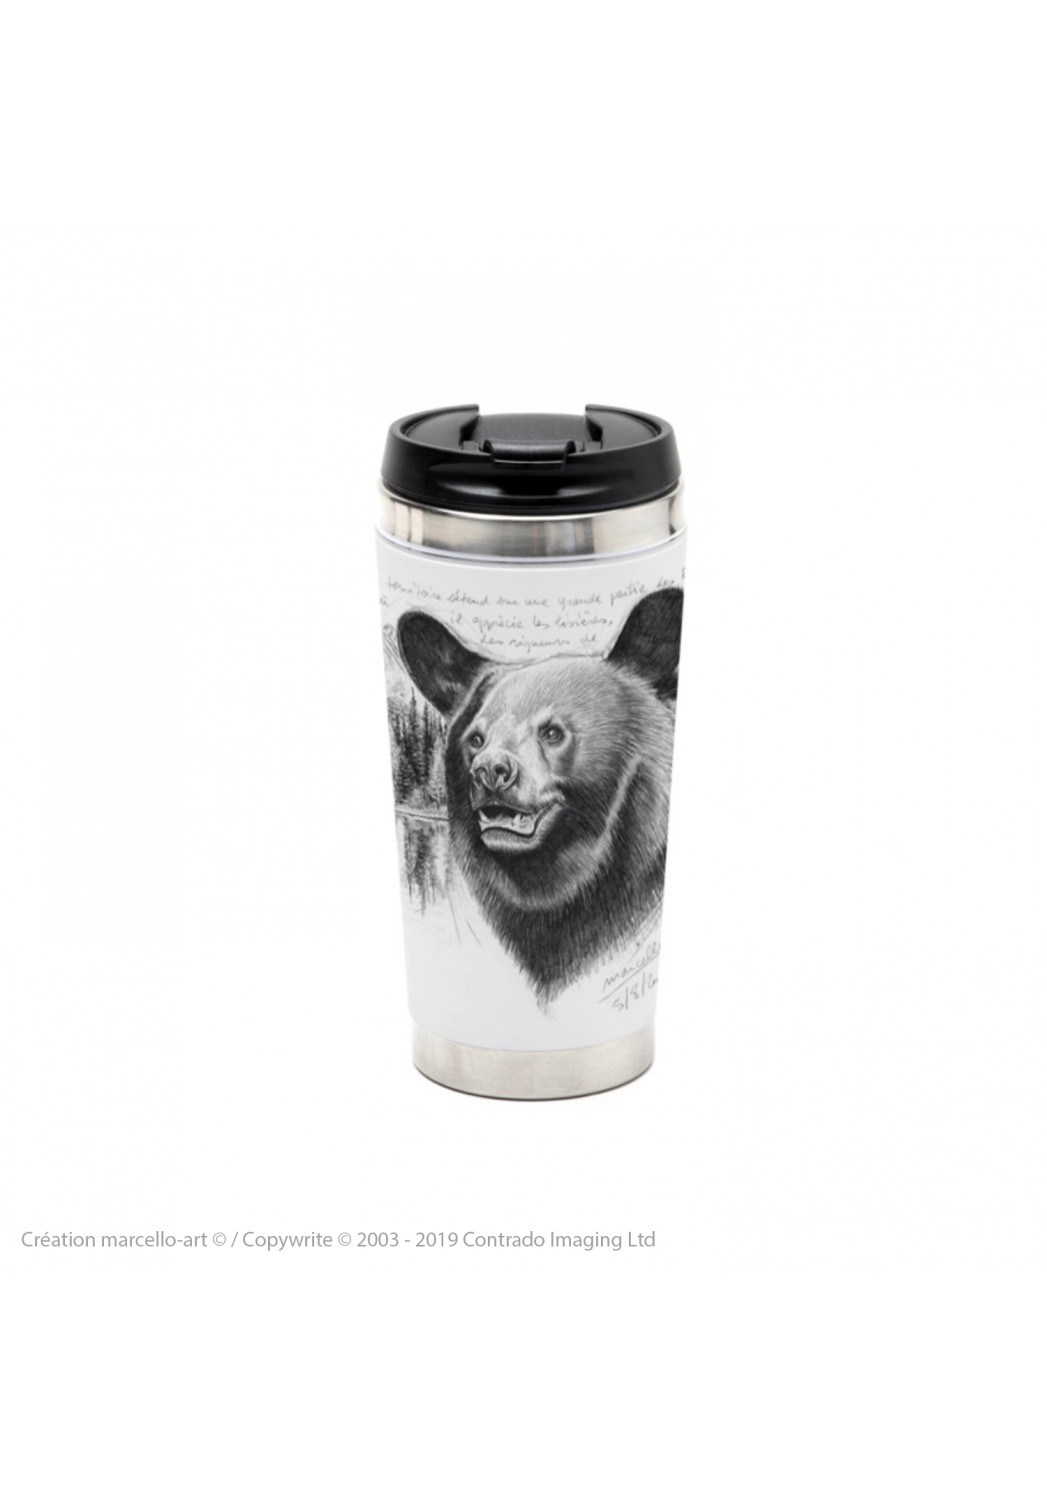 Marcello-art: Decoration accessoiries Thermos mug 382 black bear head